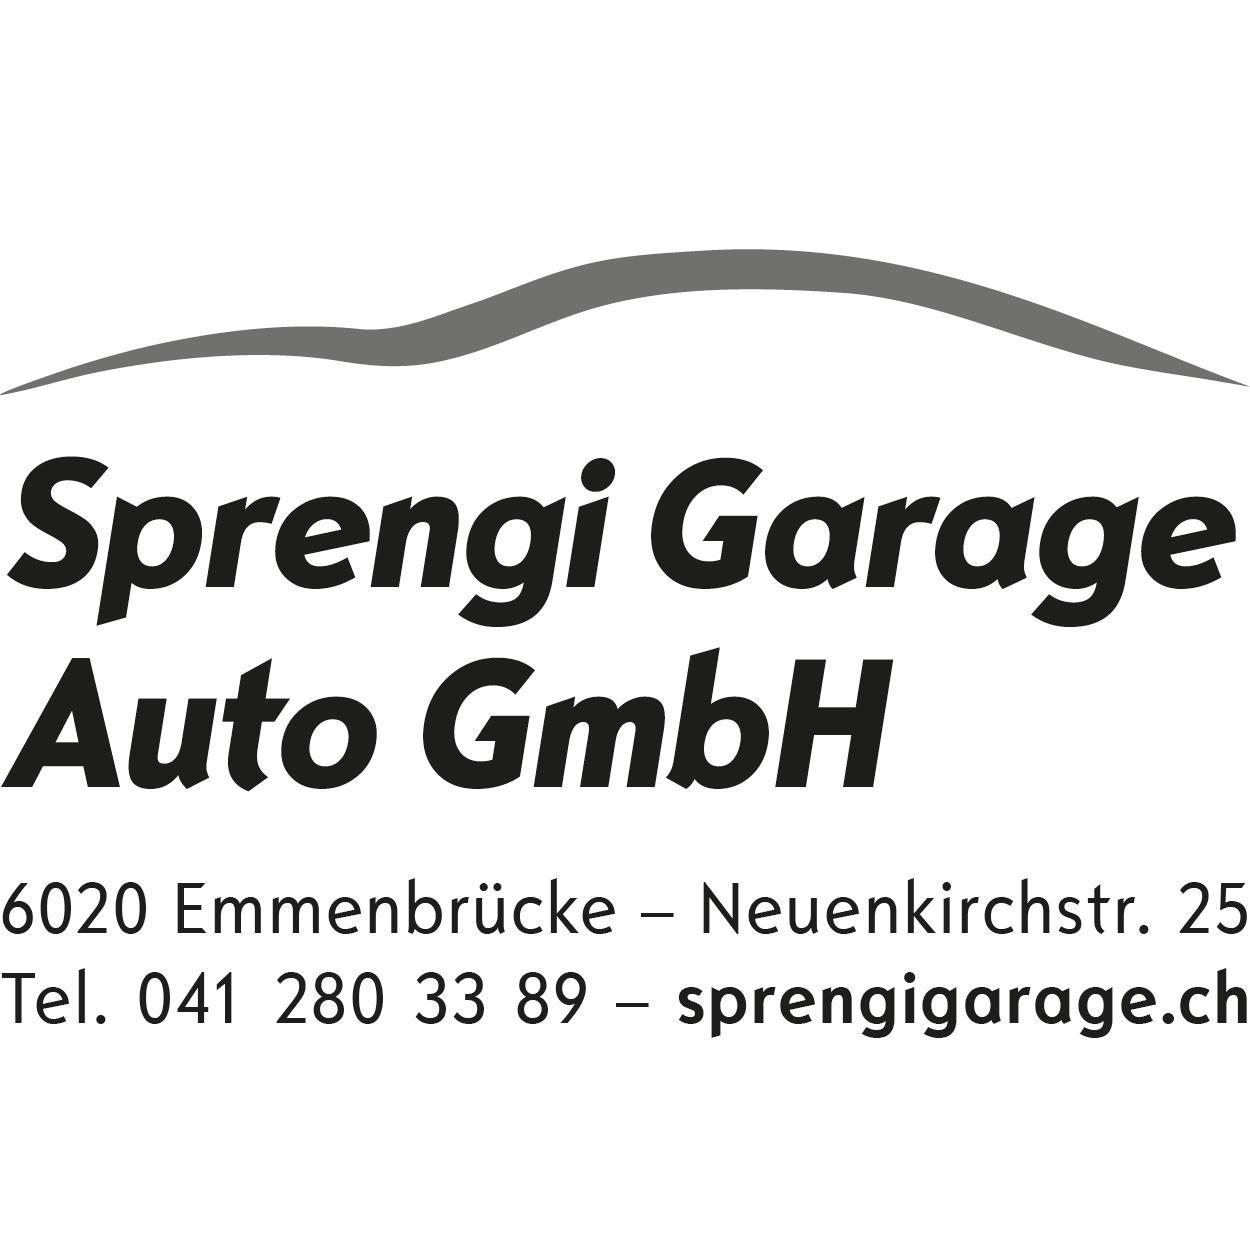 Sprengi-Garage Auto GmbH Logo